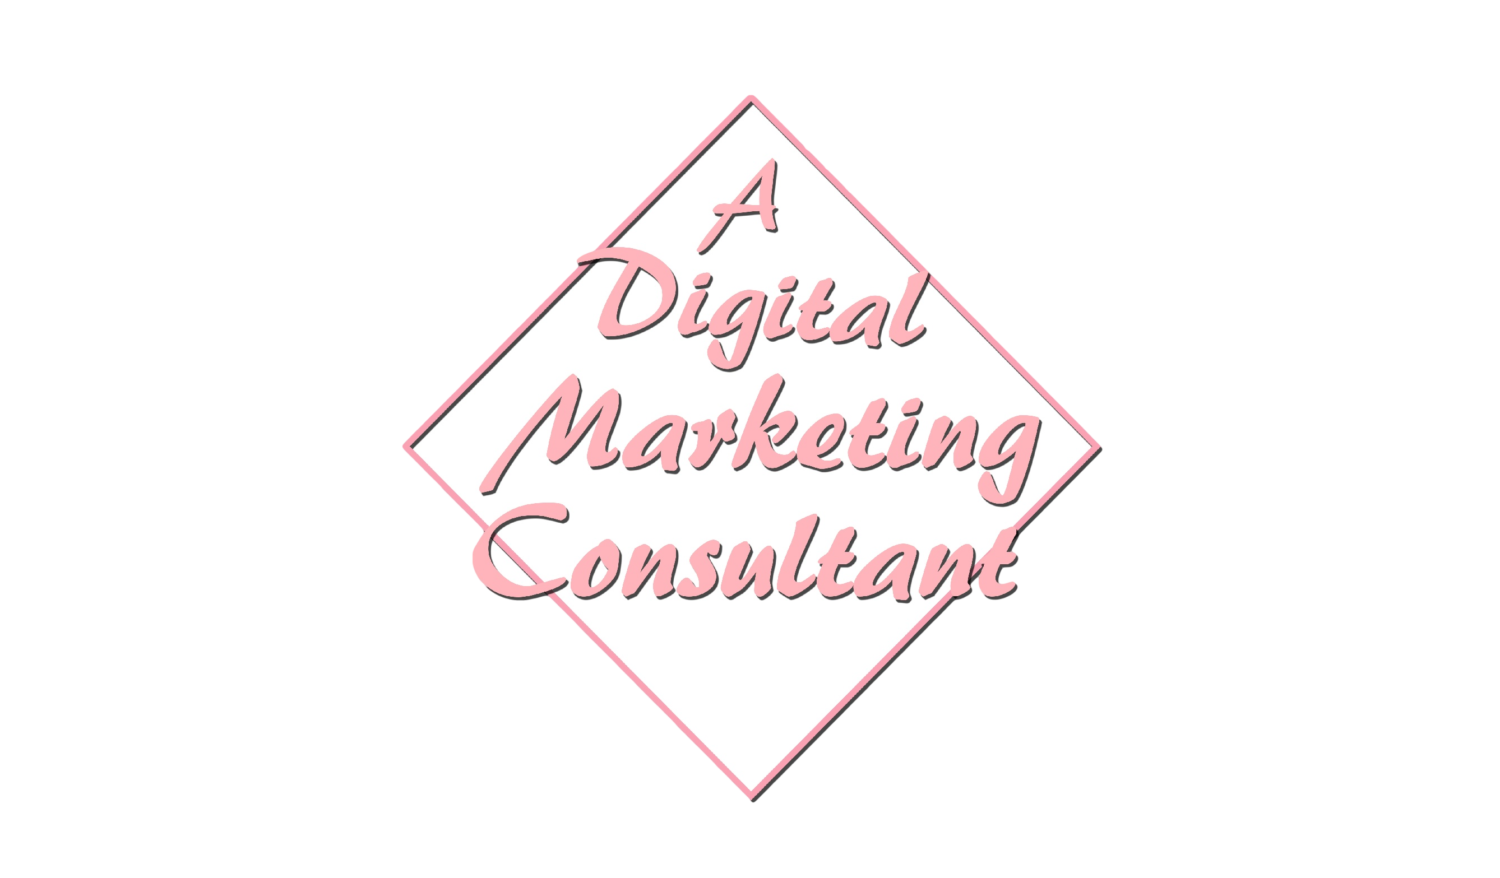 A Digital Marketing Consultant